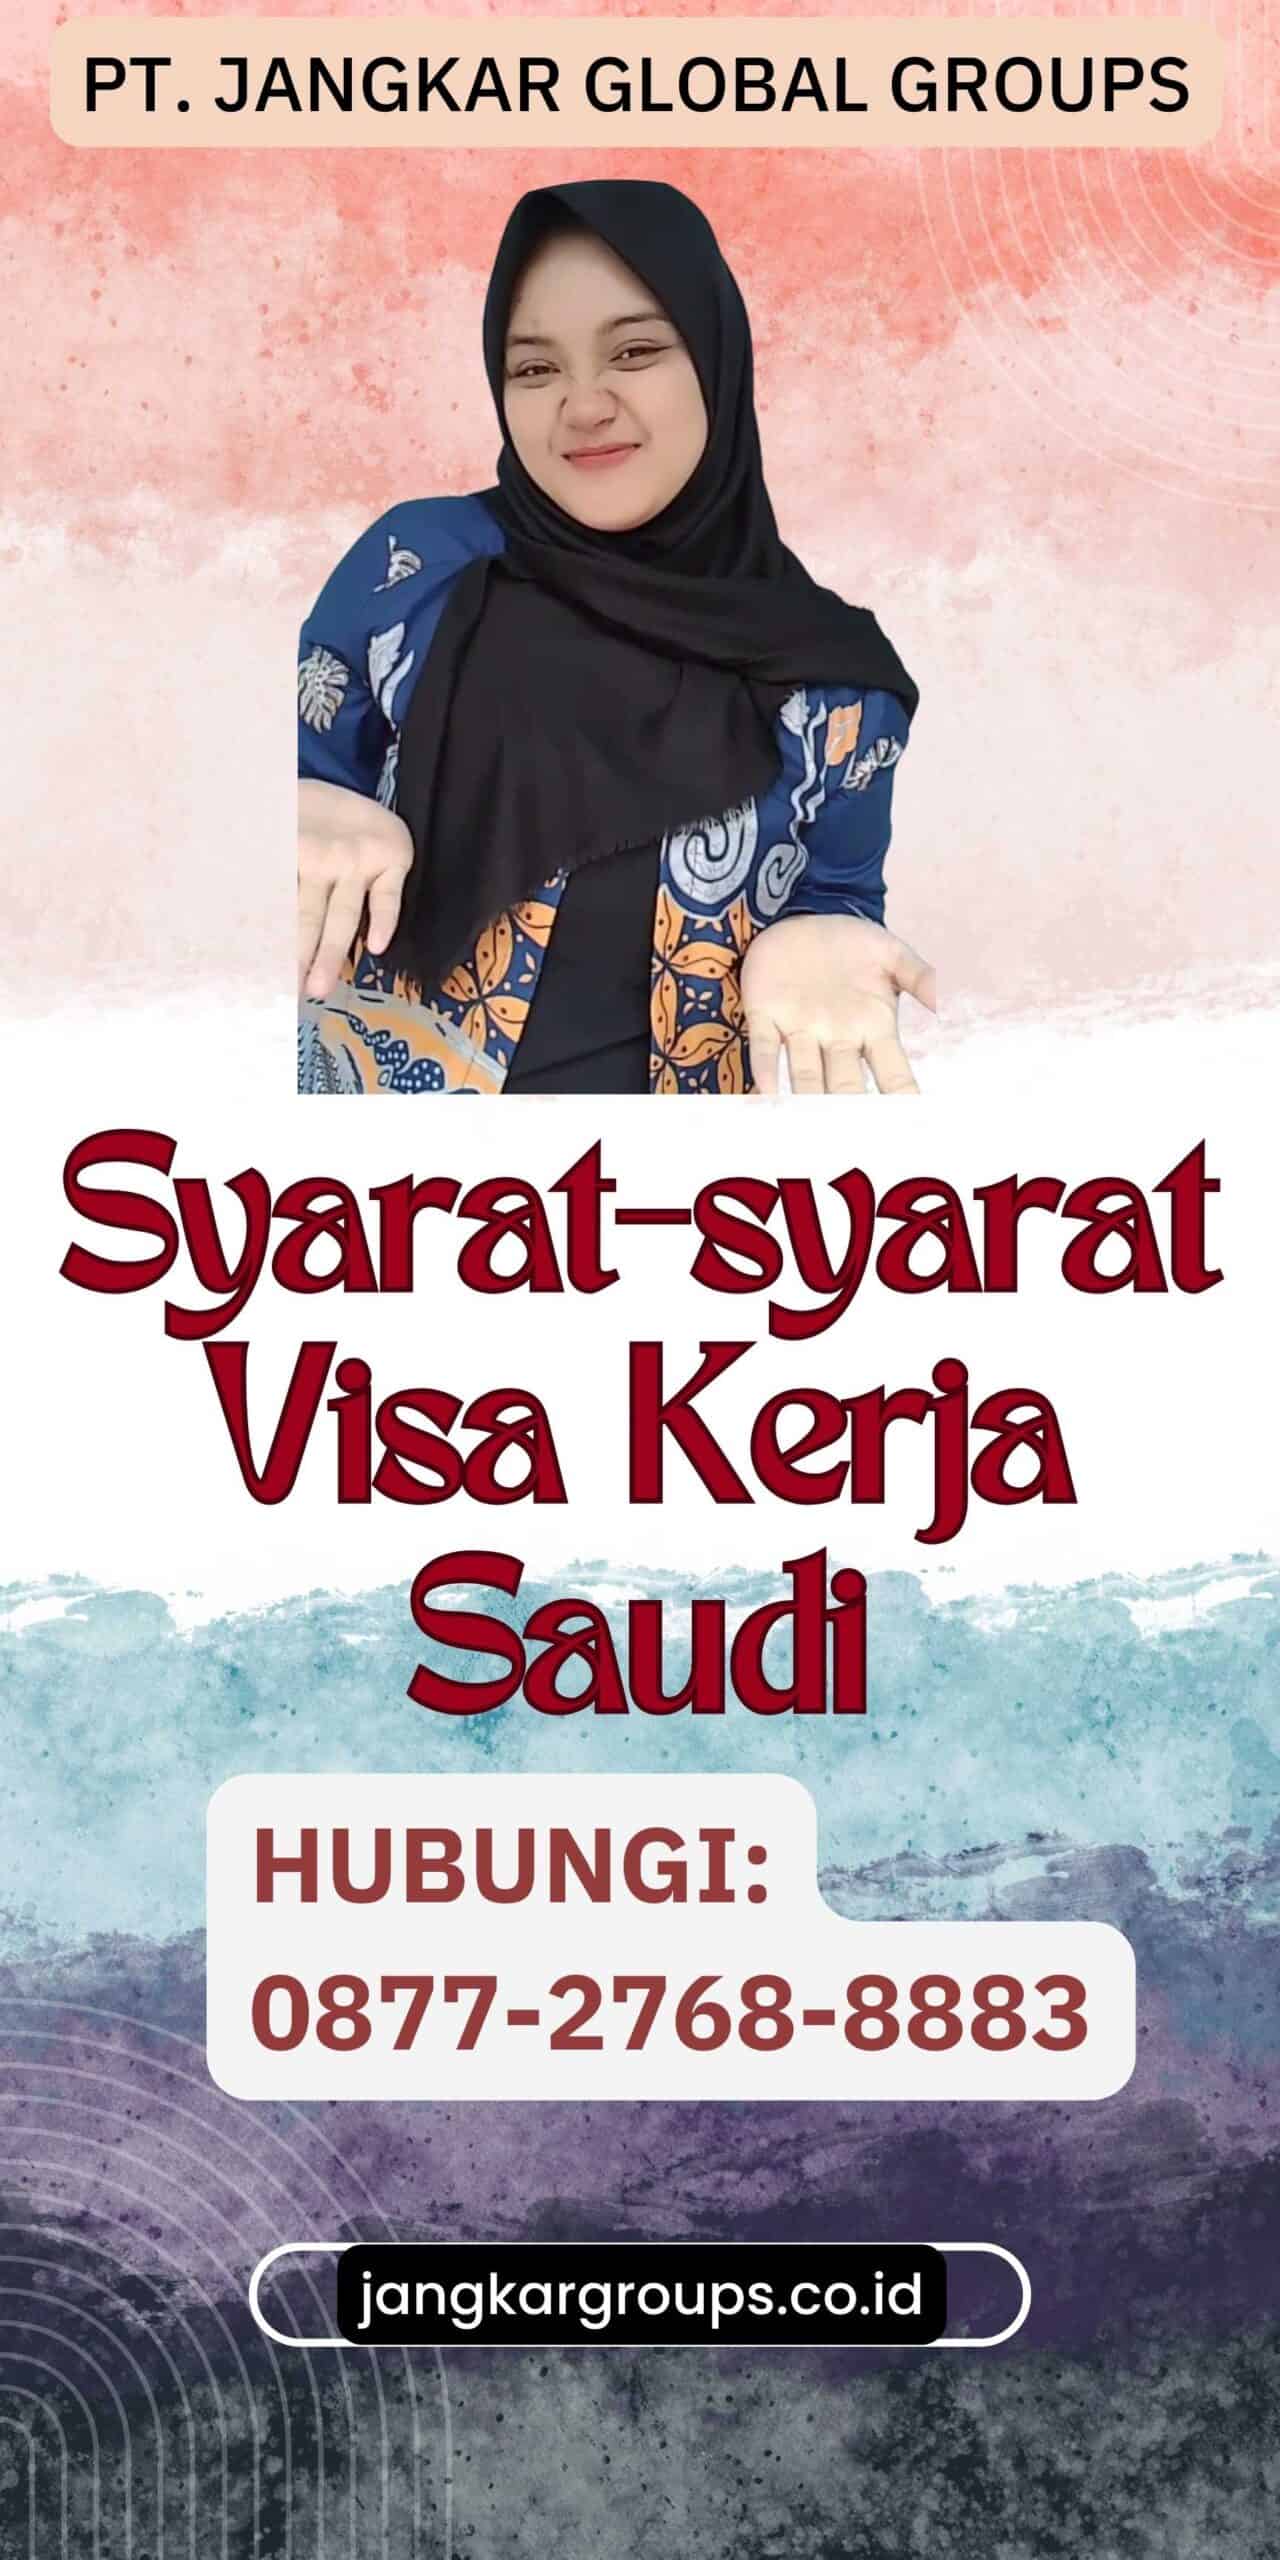 Syarat-syarat Visa Kerja Saudi